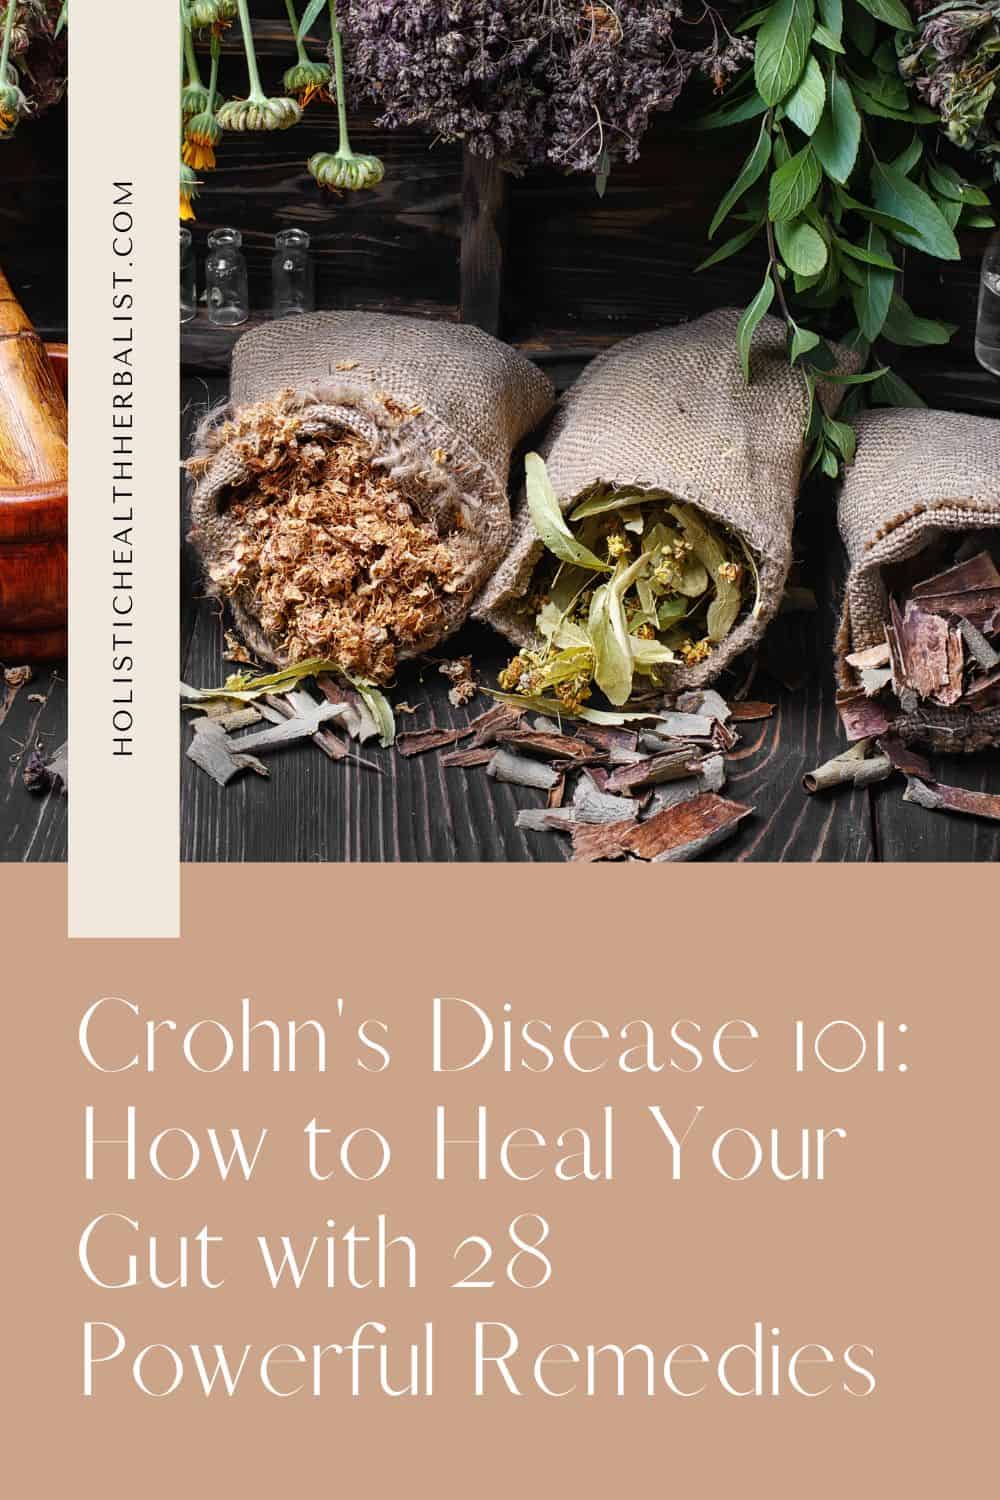 Natural remedies for Crohn's